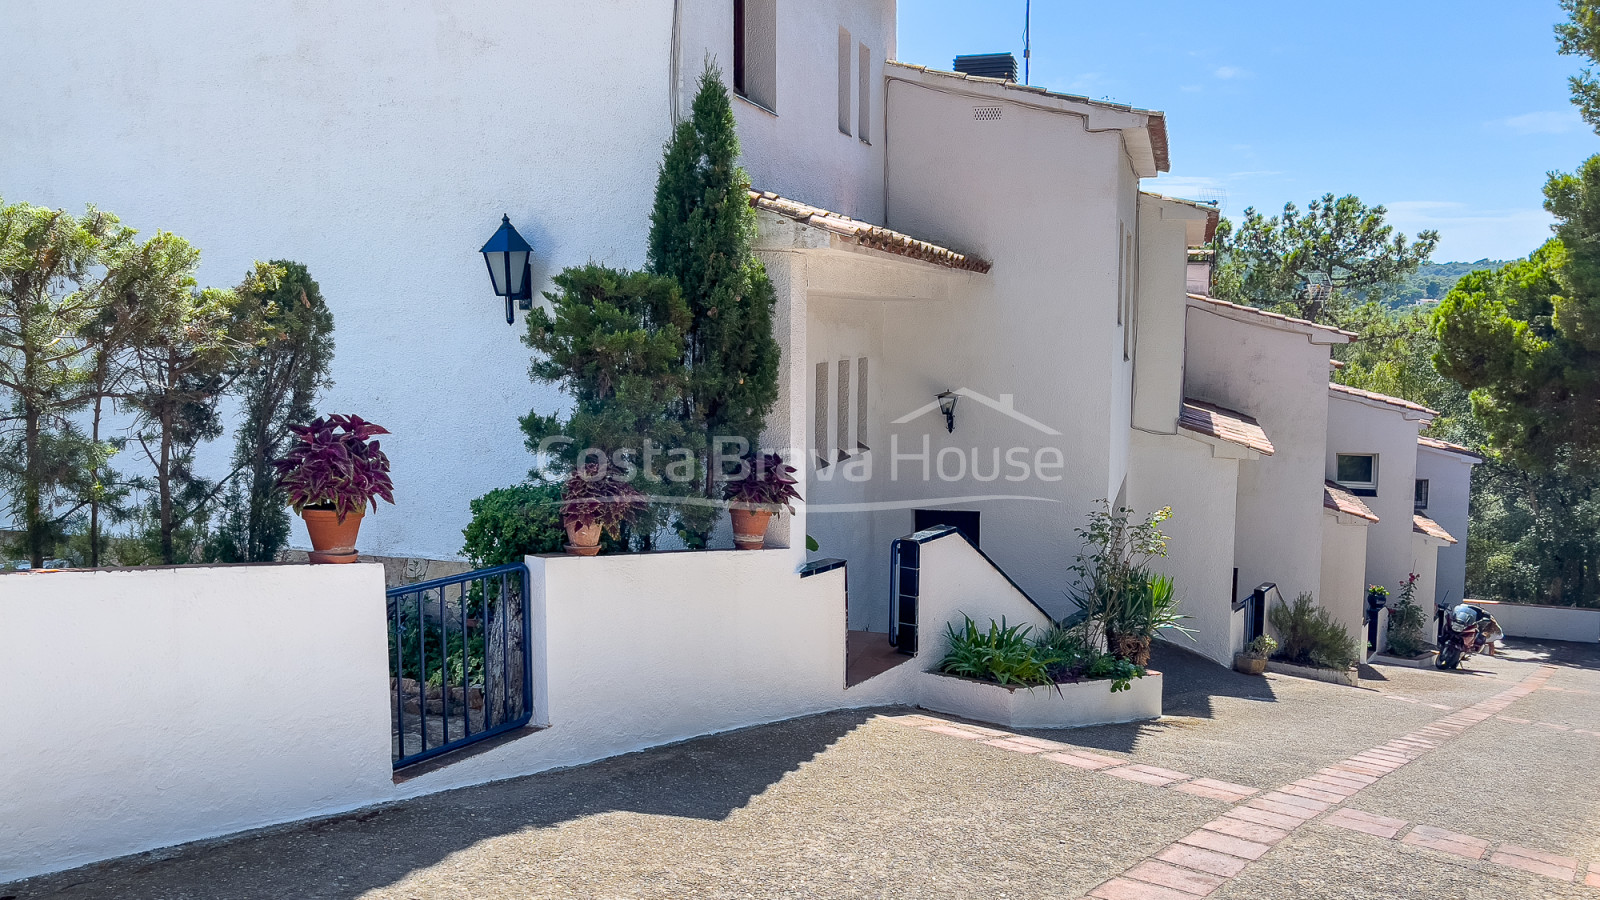 Mediterranean house with patio-garden 10 min walk from Tamariu beach